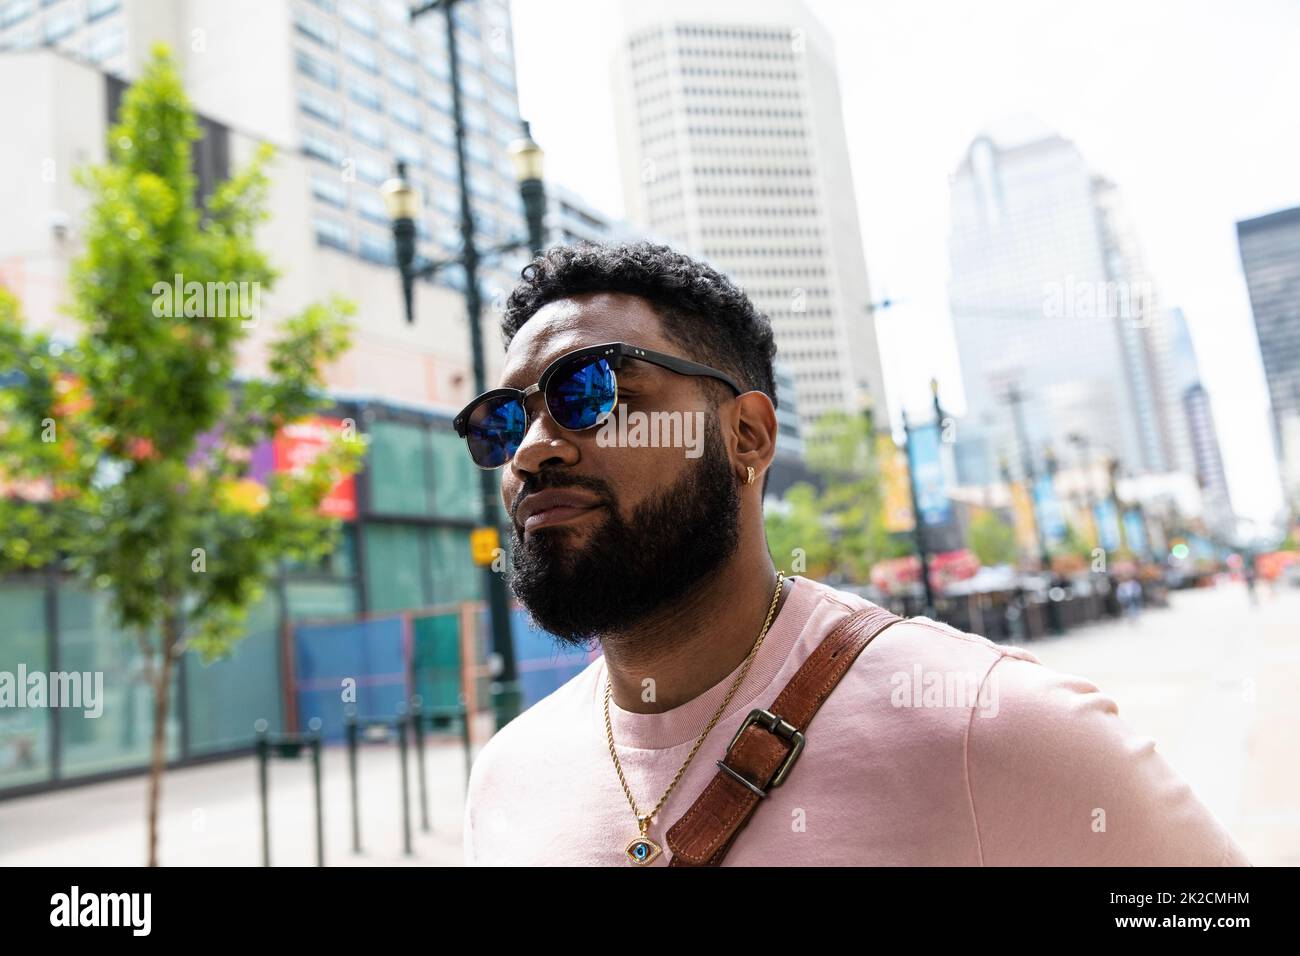 Portrait handsome man in sunglasses on city sidewalk Stock Photo